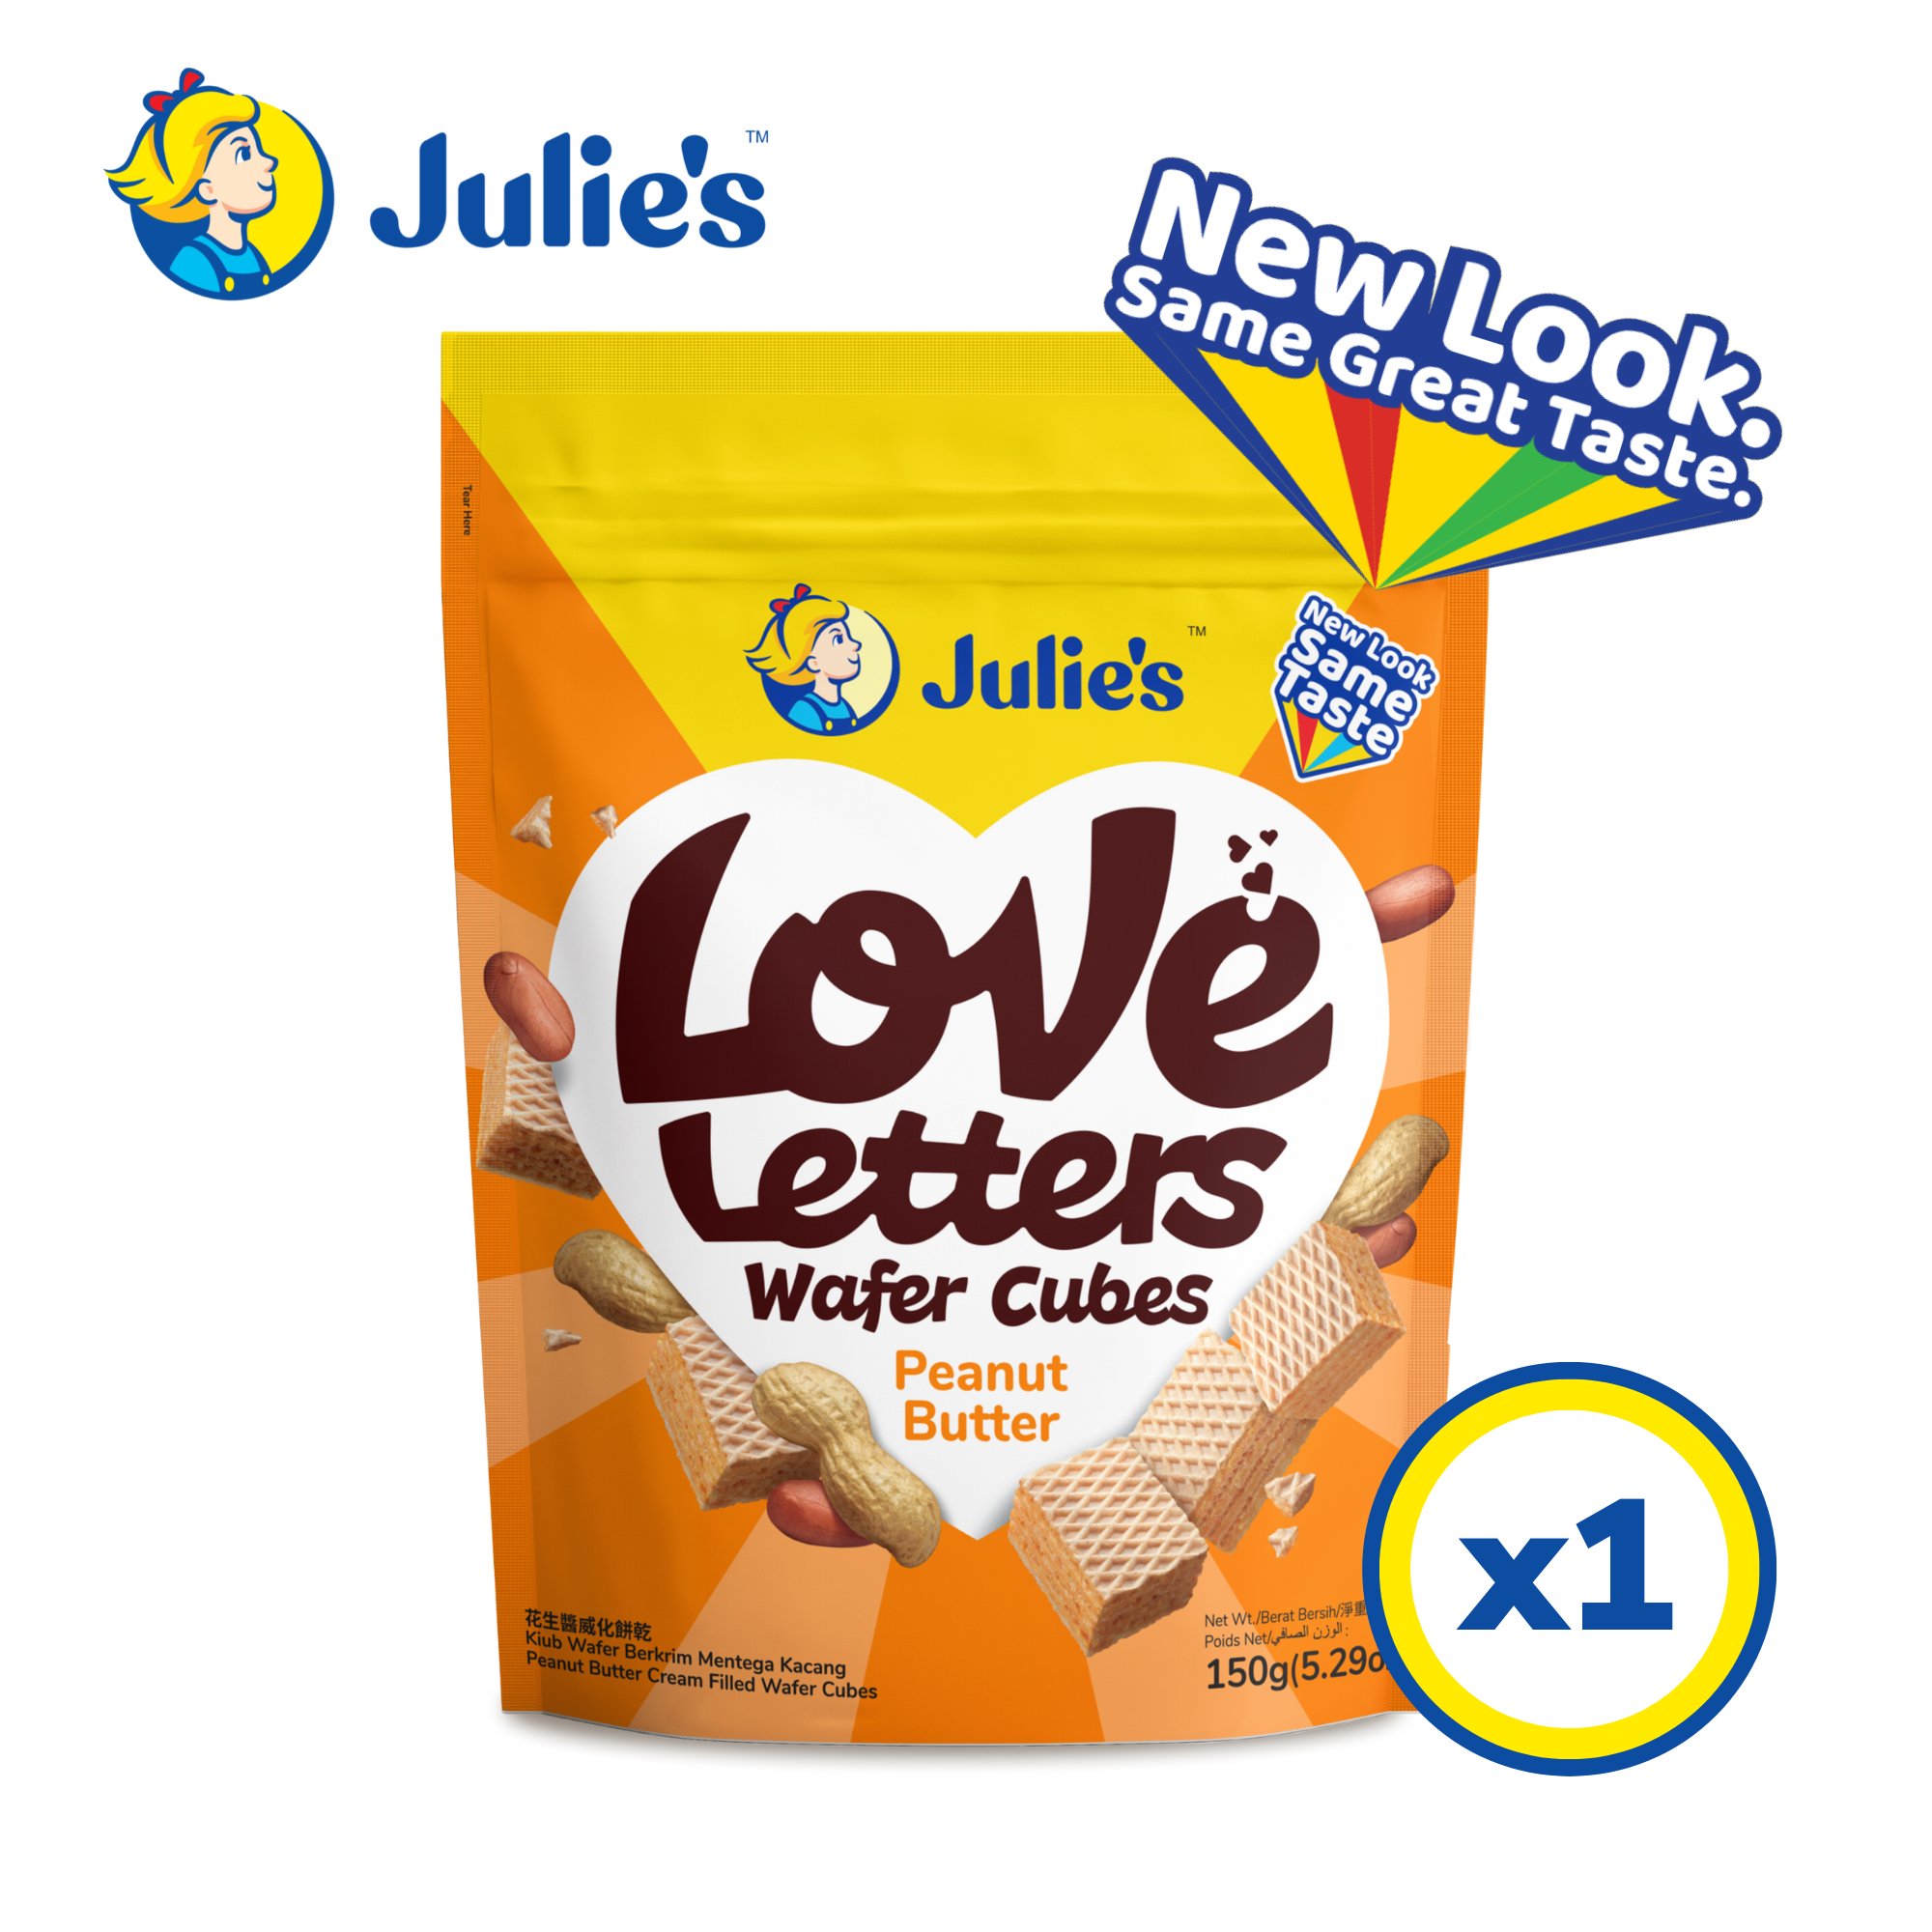 Julie's Love Letters Wafer Cubes Peanut Butter 150g x 1 pack